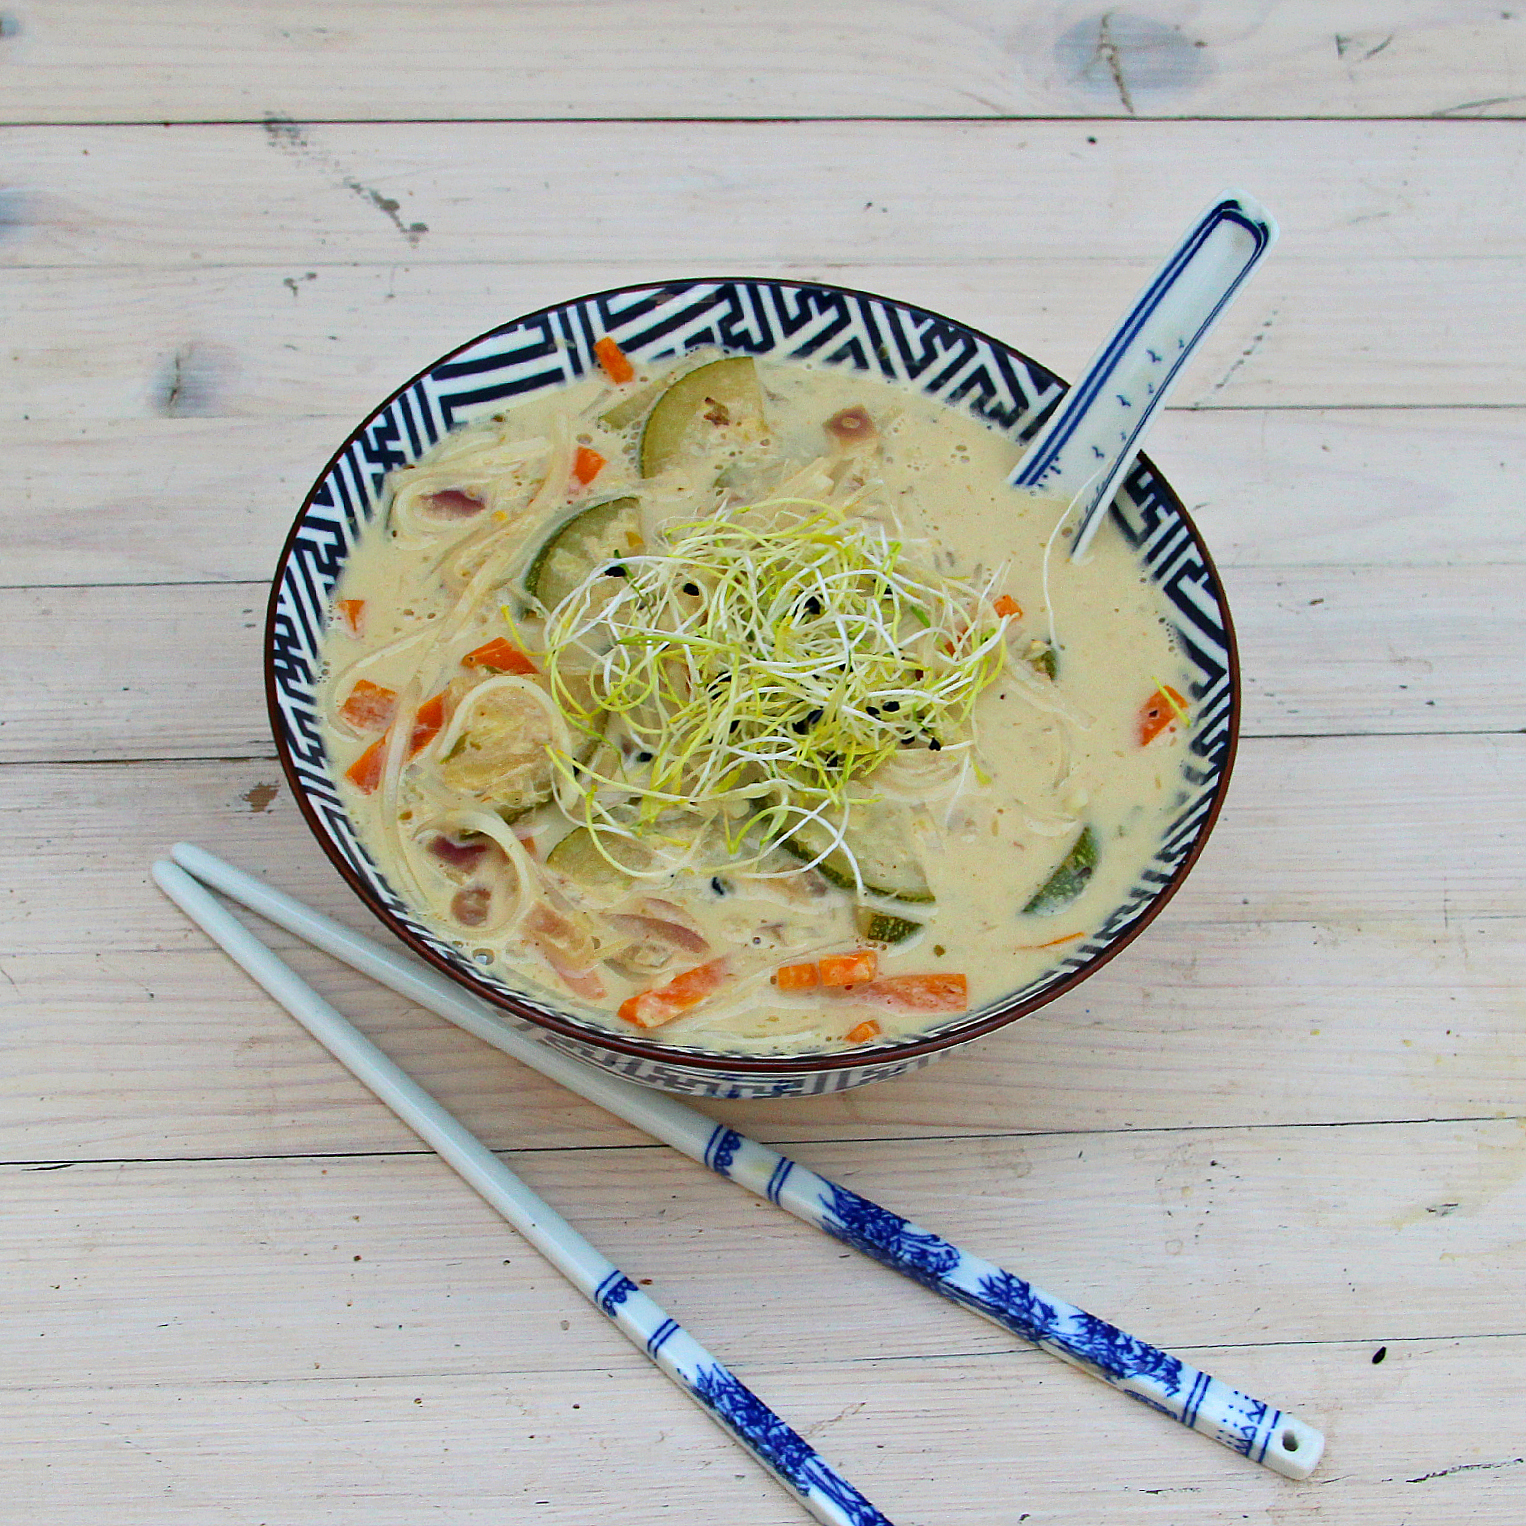 Rice Noodle Coconut Green Curry Soup - The Vegan Eskimo